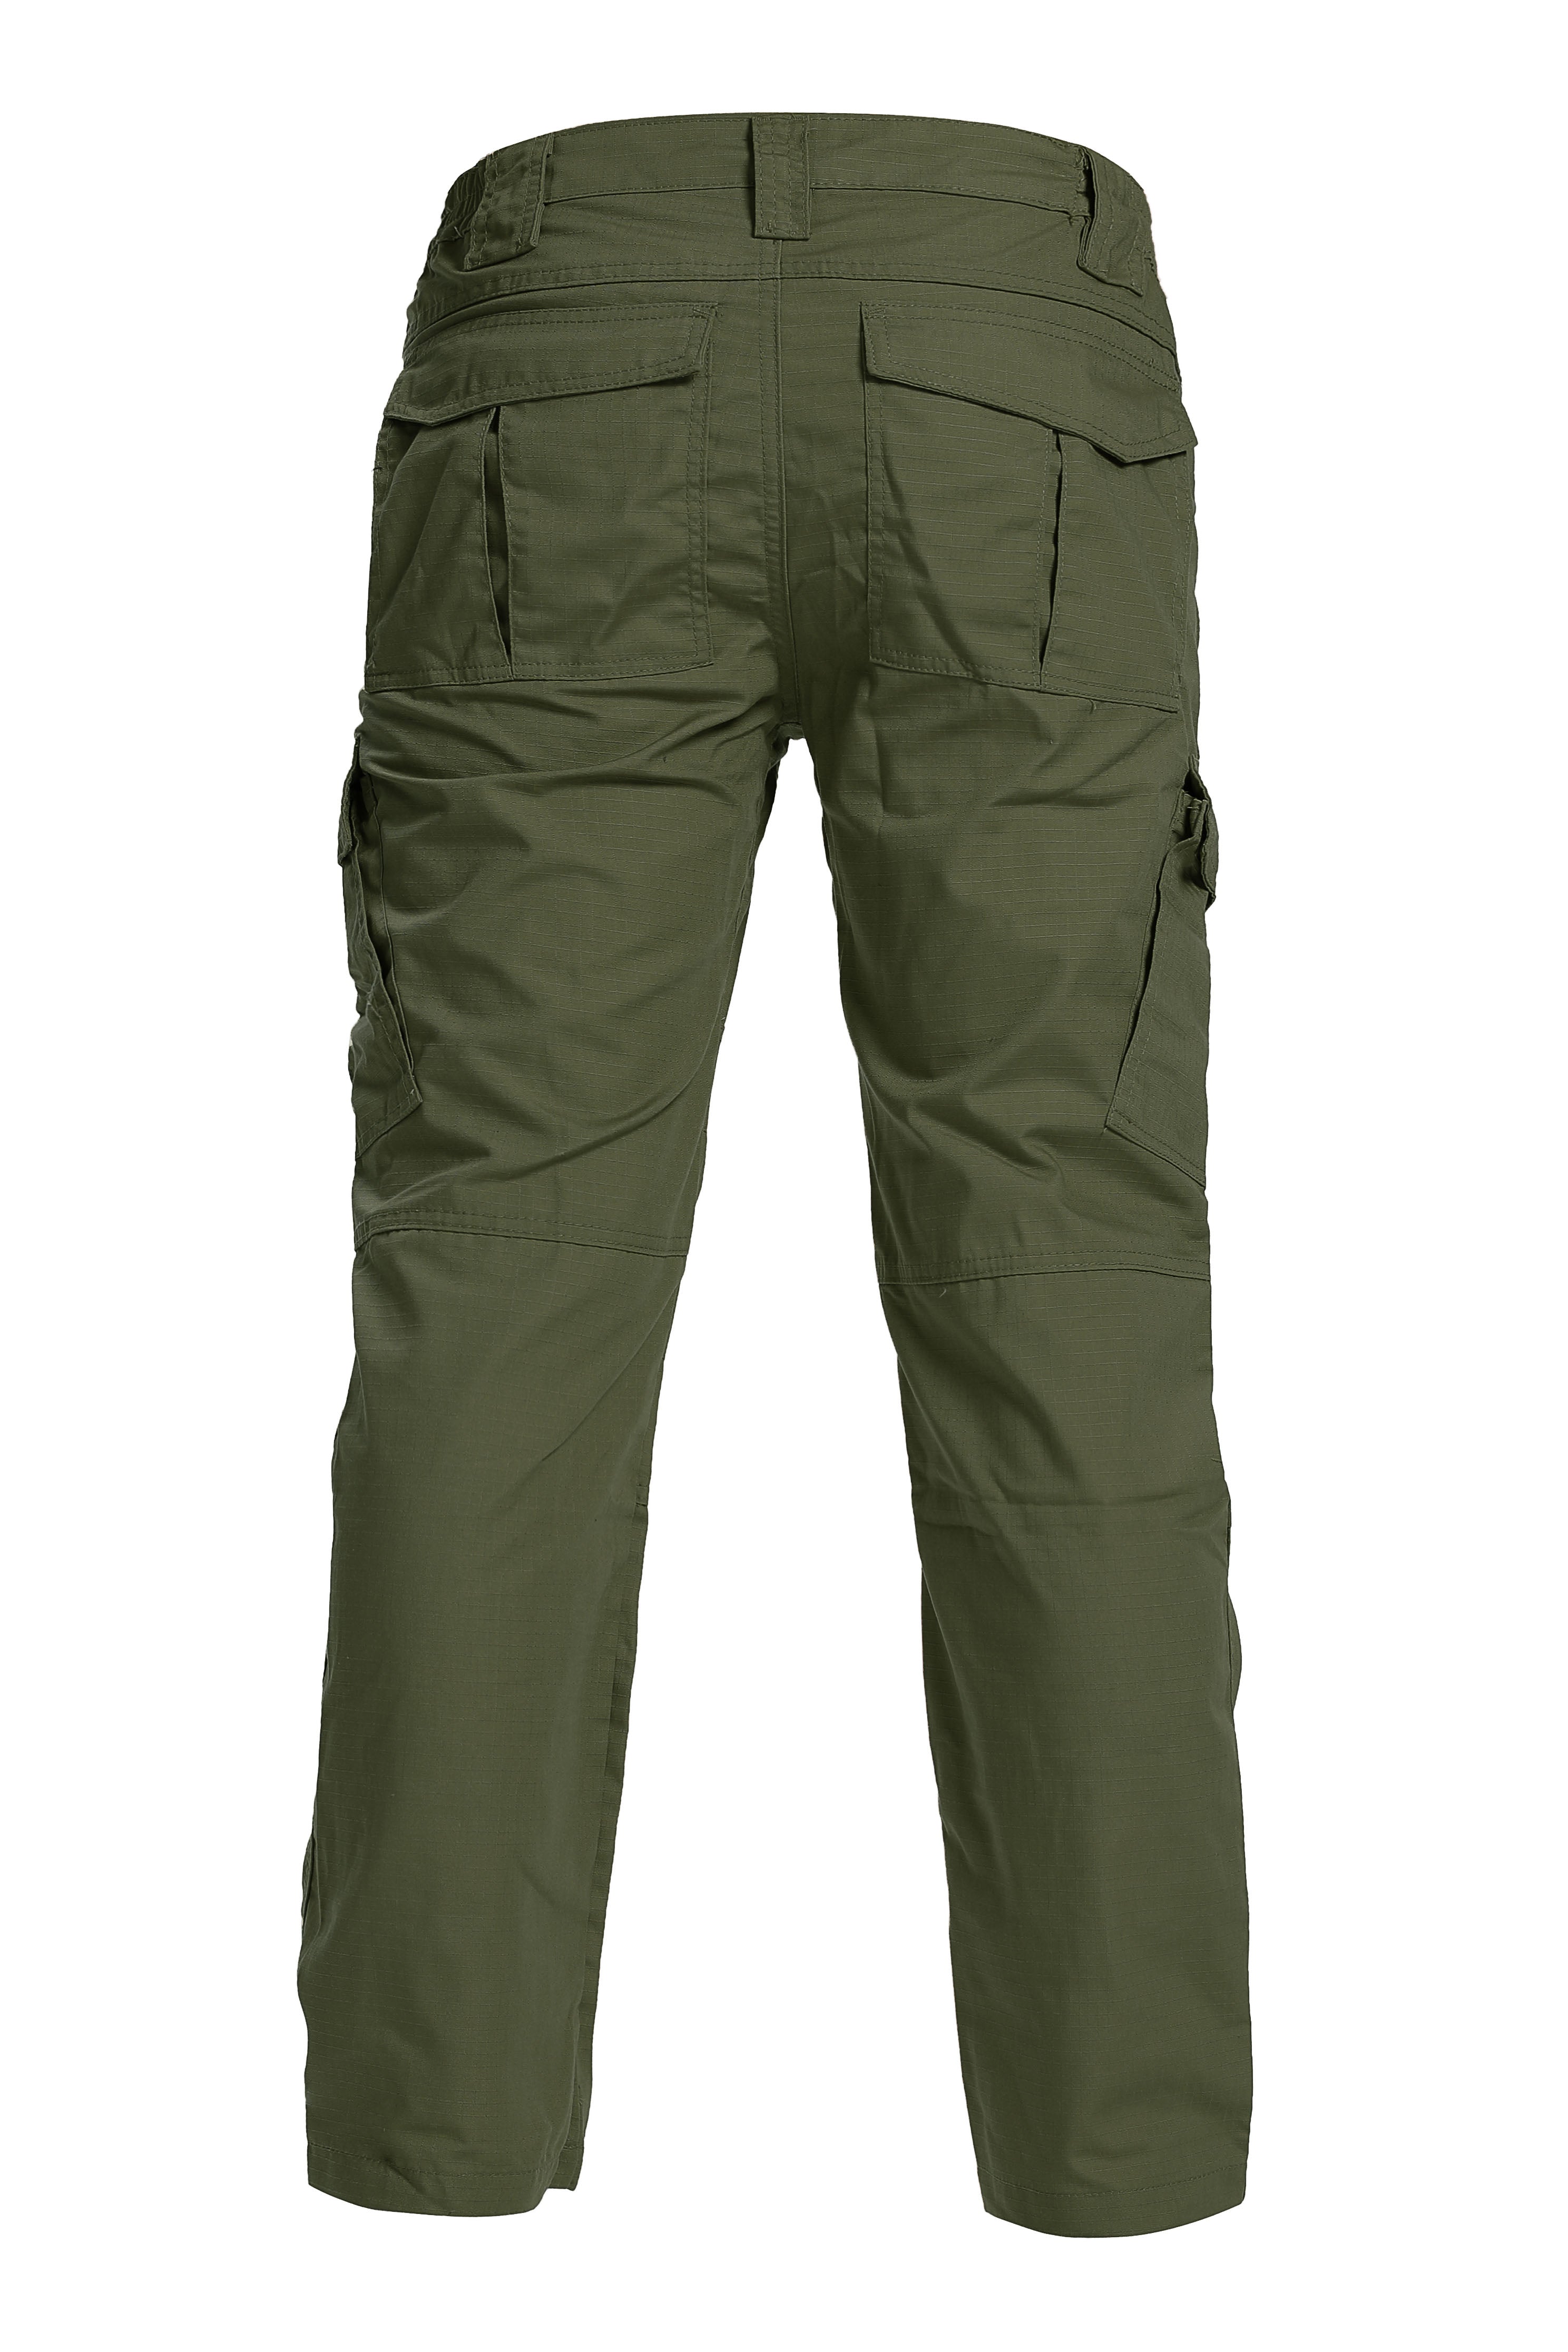 Mens Cargo Pants Work Combat Tactical Trousers (green)